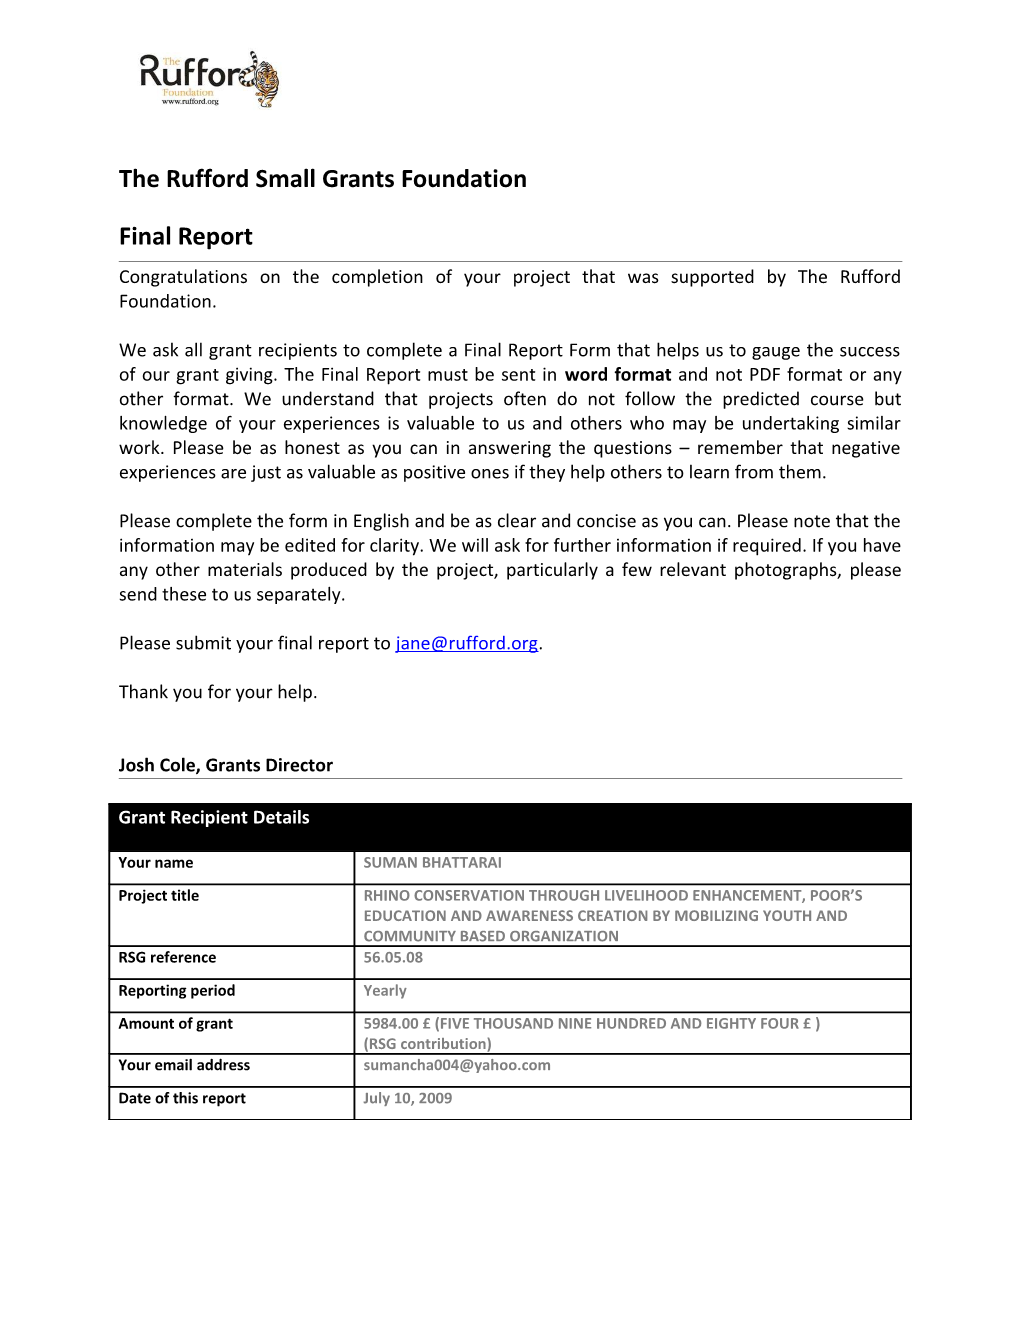 The Rufford Small Grants Foundation s41